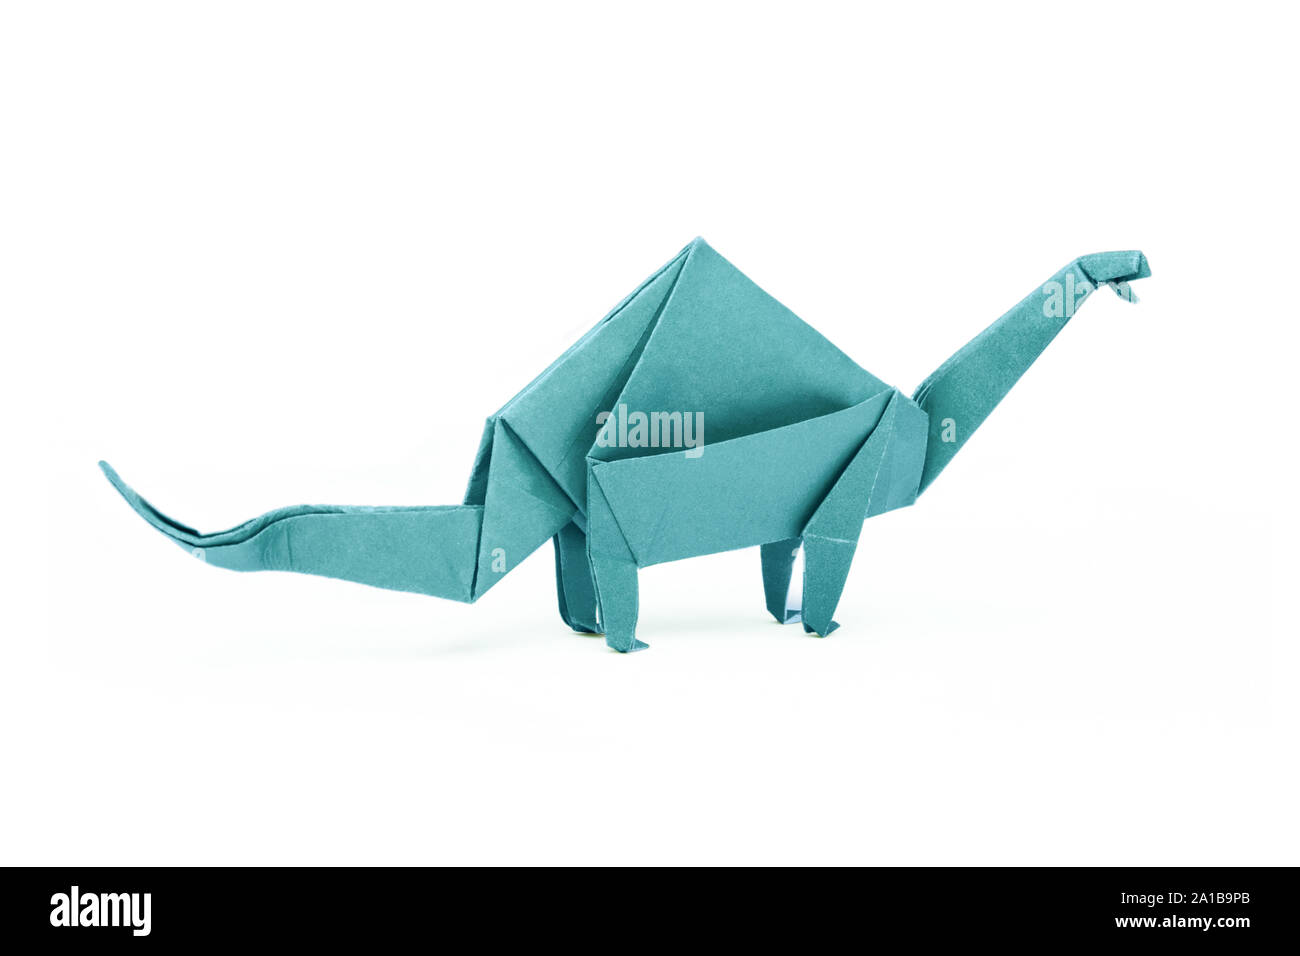 Isolated origami paper blue dinosaur brontosaurus Stock Photo